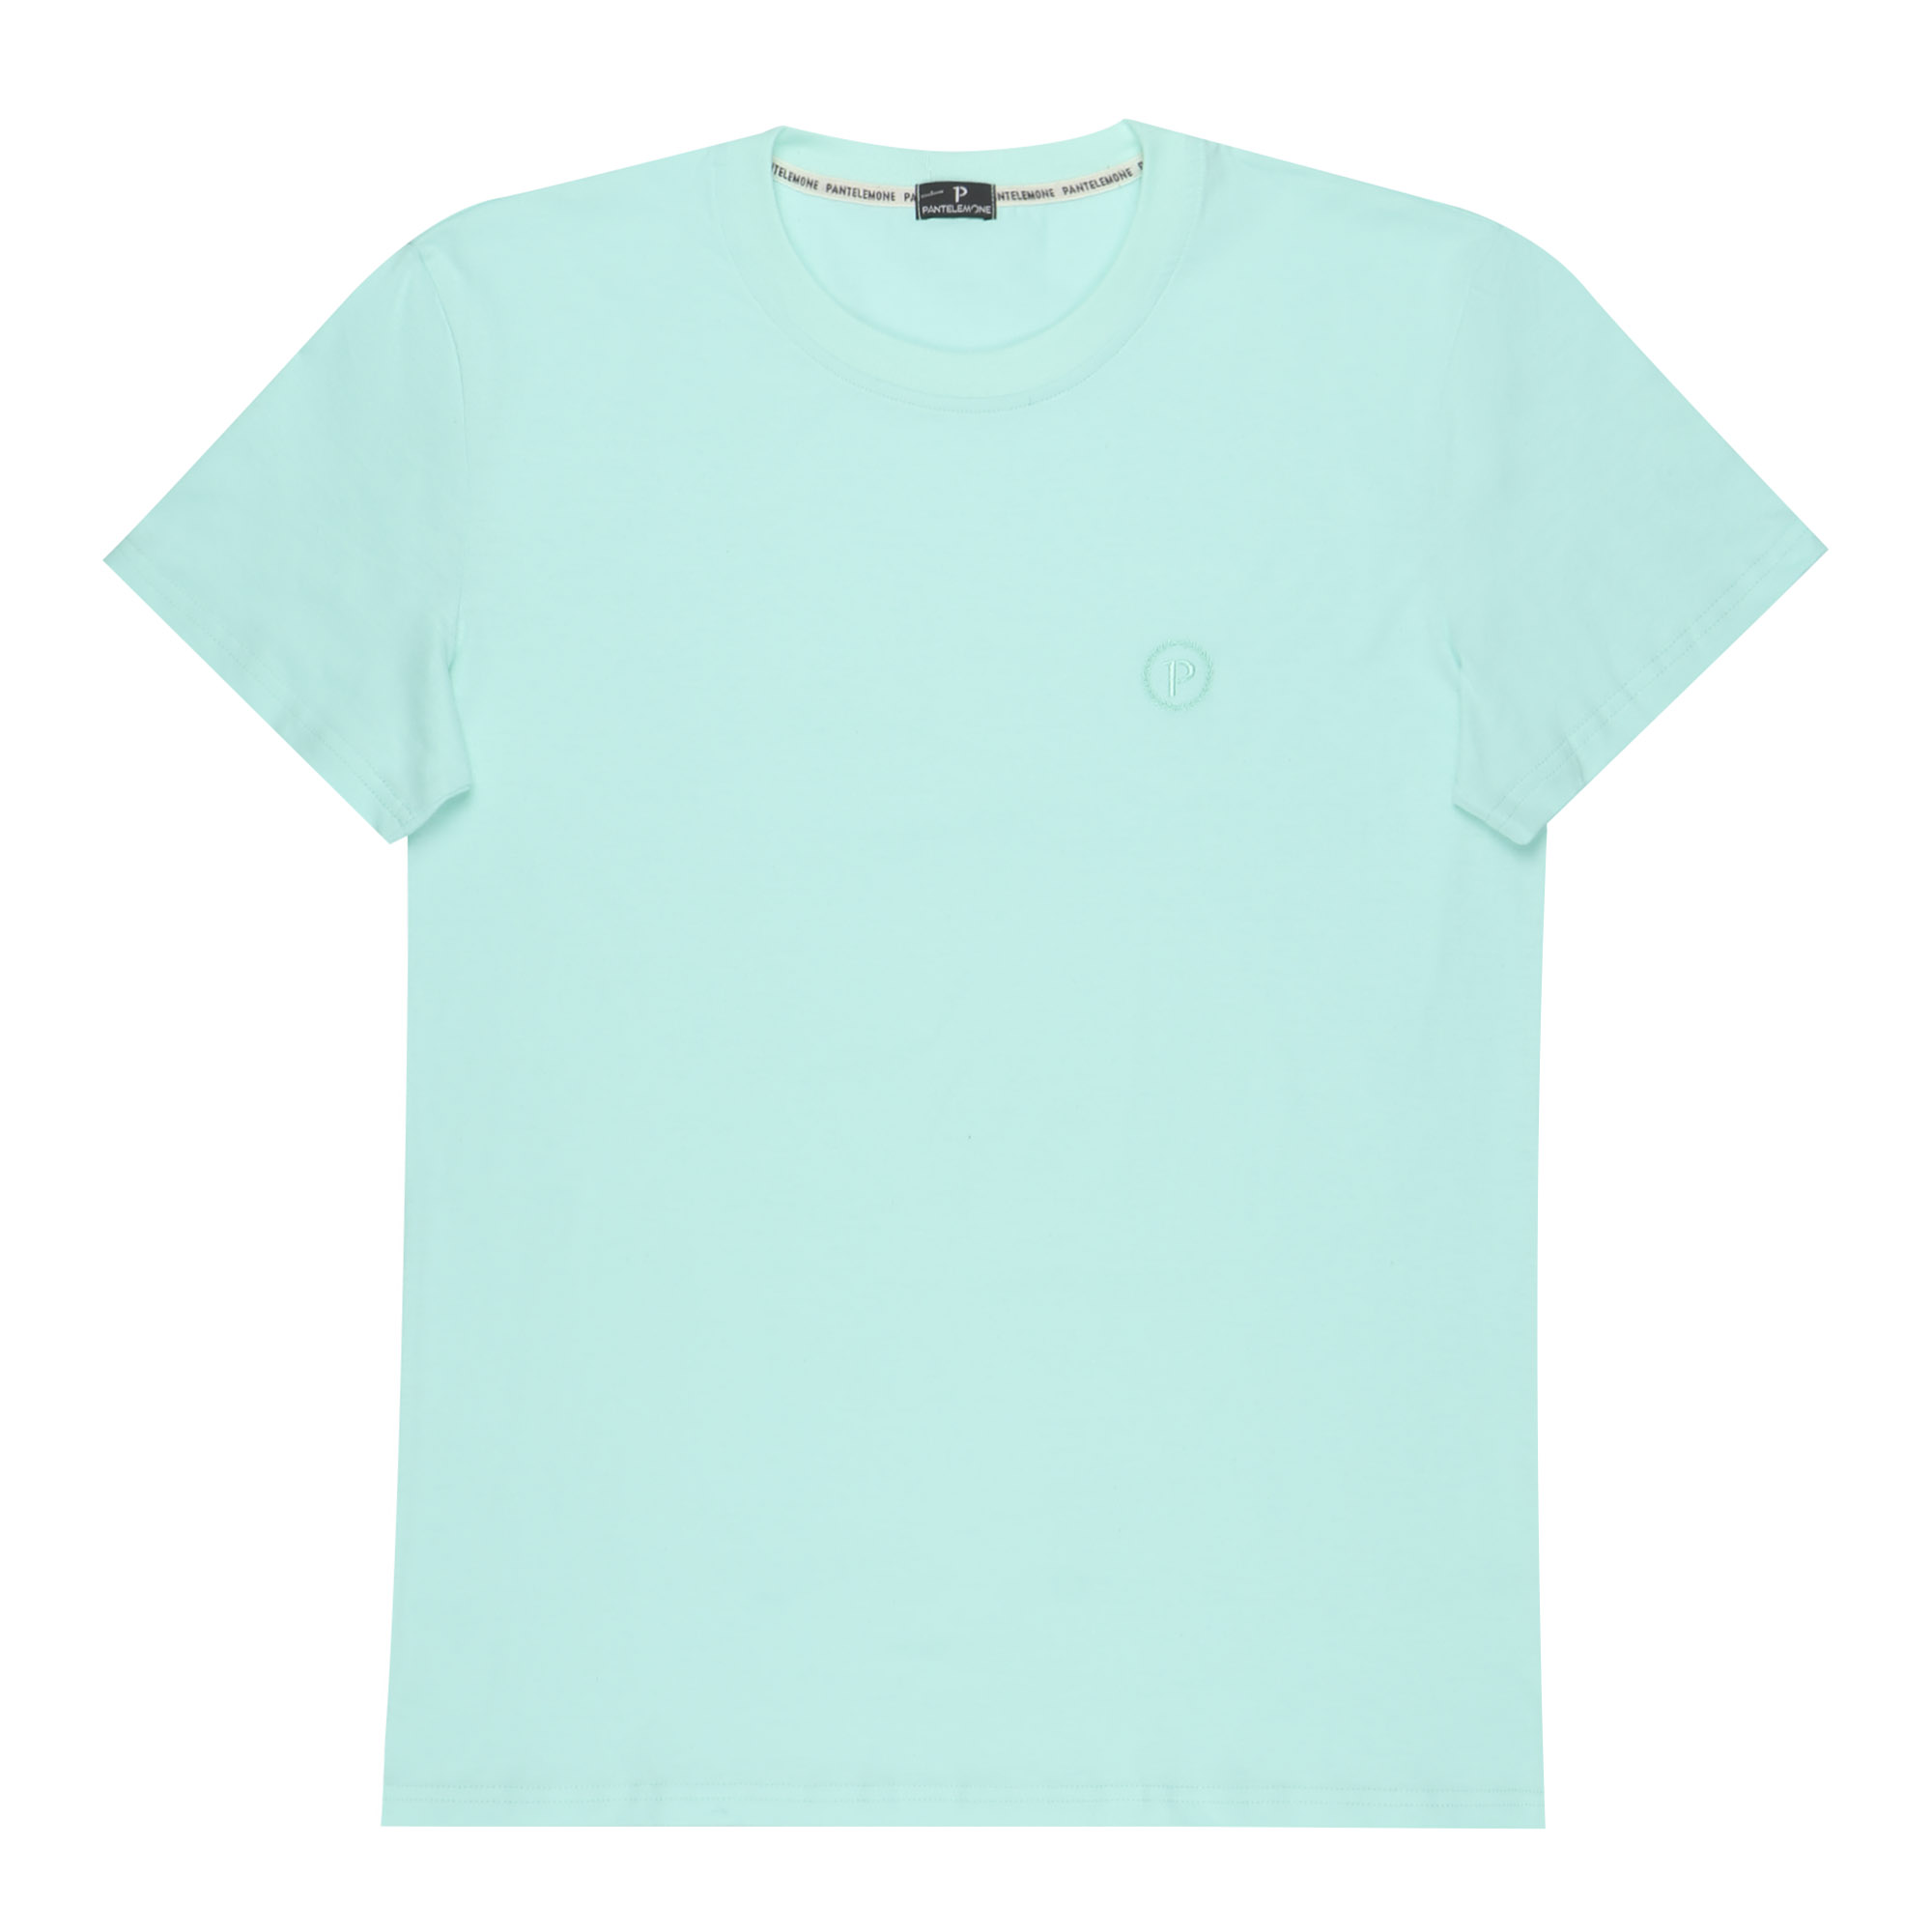 Мужская футболка Pantelemone MF-913 50 ментоловая, цвет ментоловый, размер 50 - фото 1